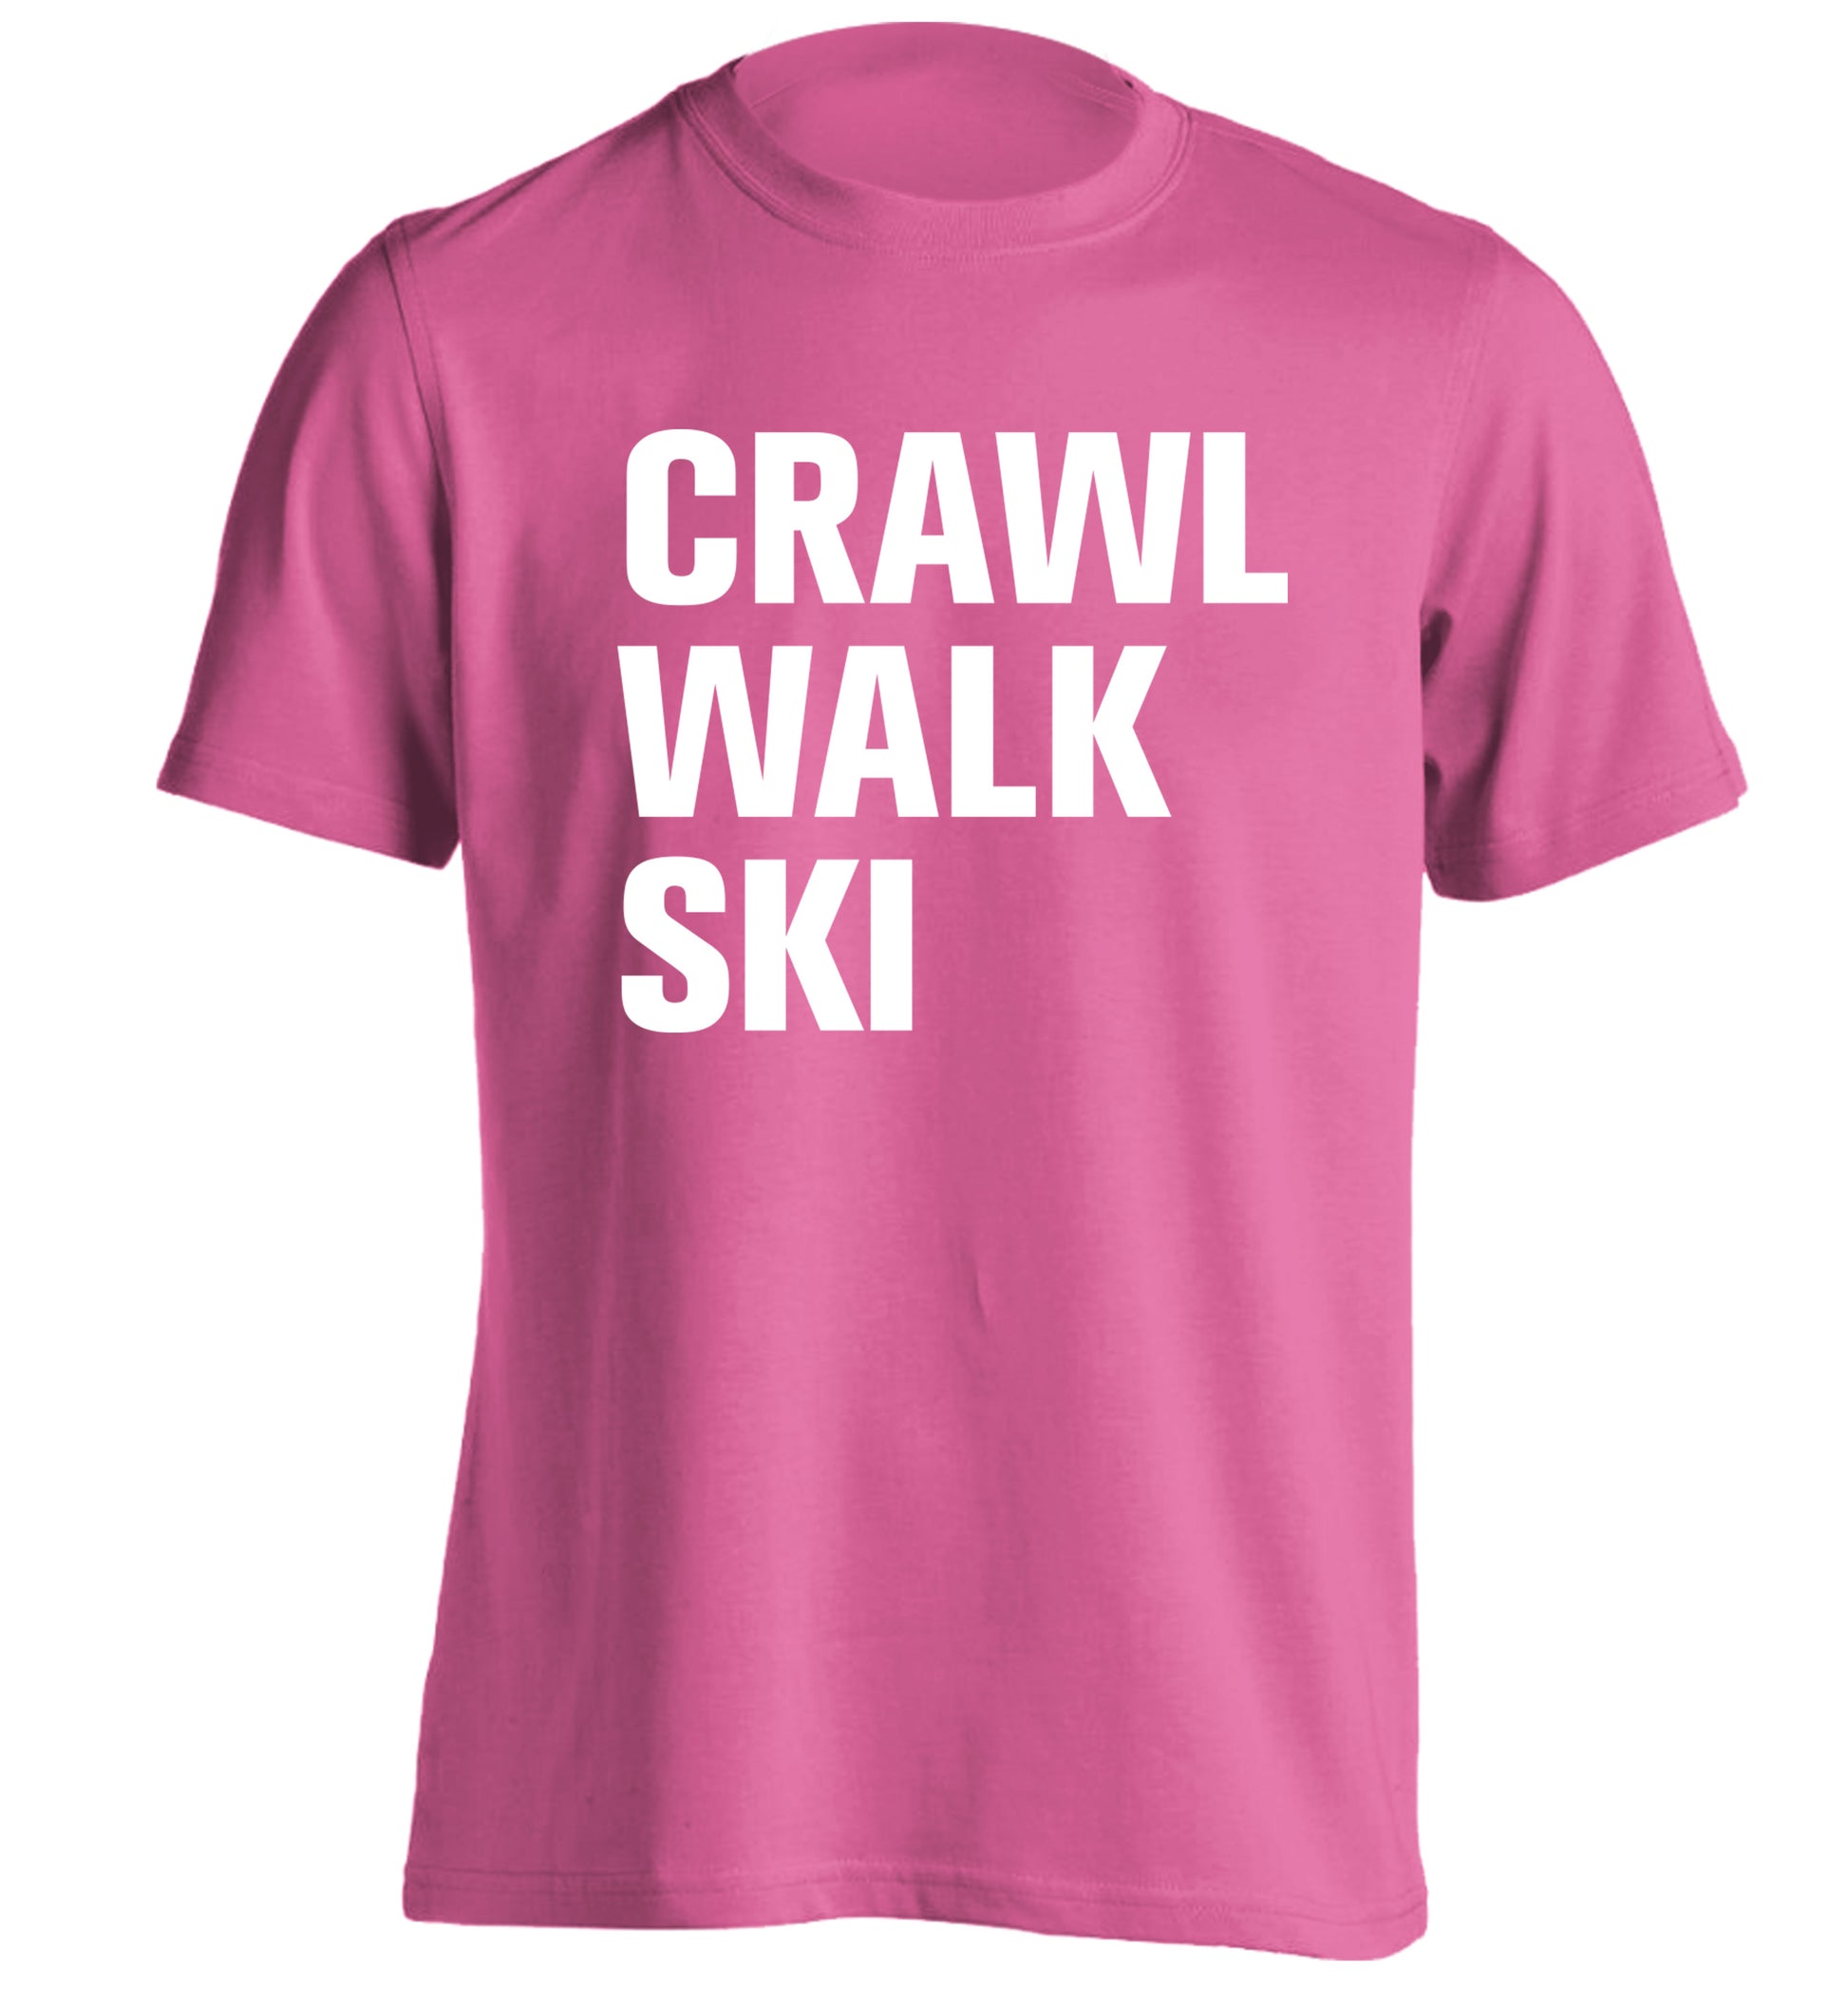 Crawl walk ski adults unisexpink Tshirt 2XL